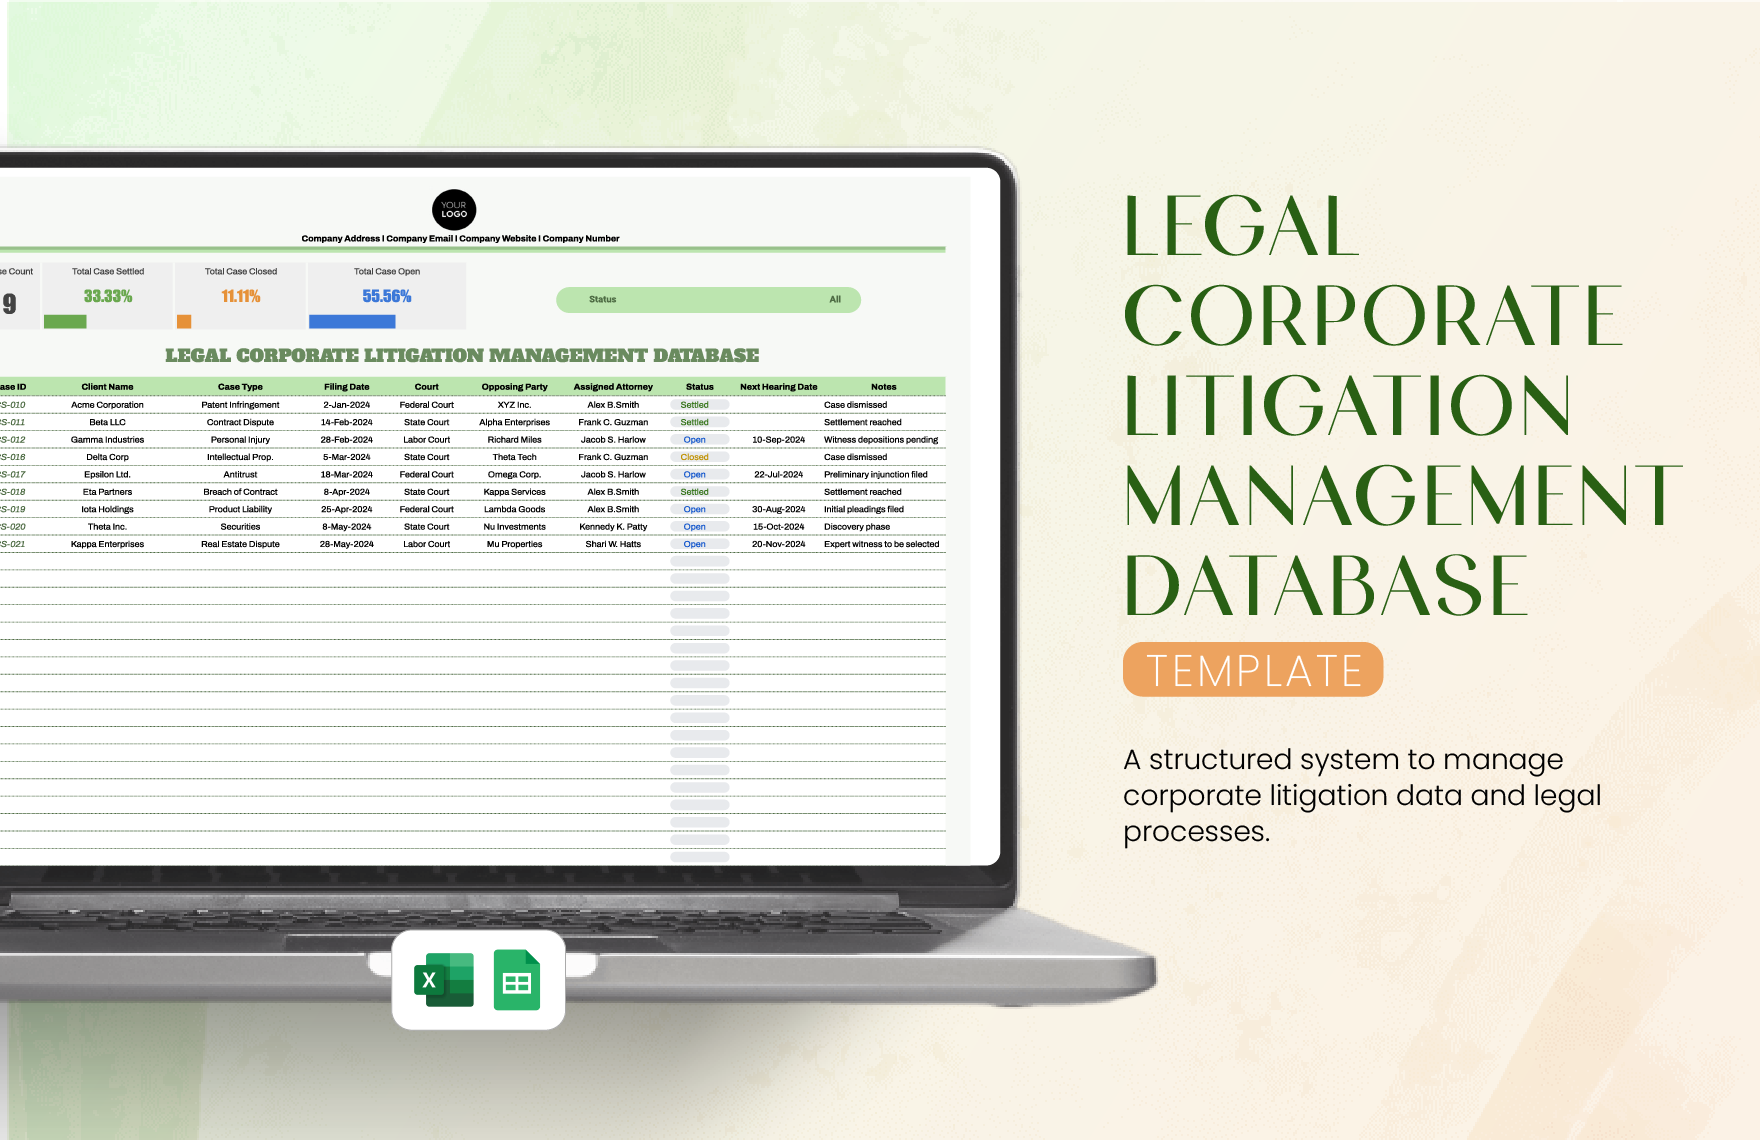 Legal Corporate Litigation Management Database Template in Excel, Google Sheets